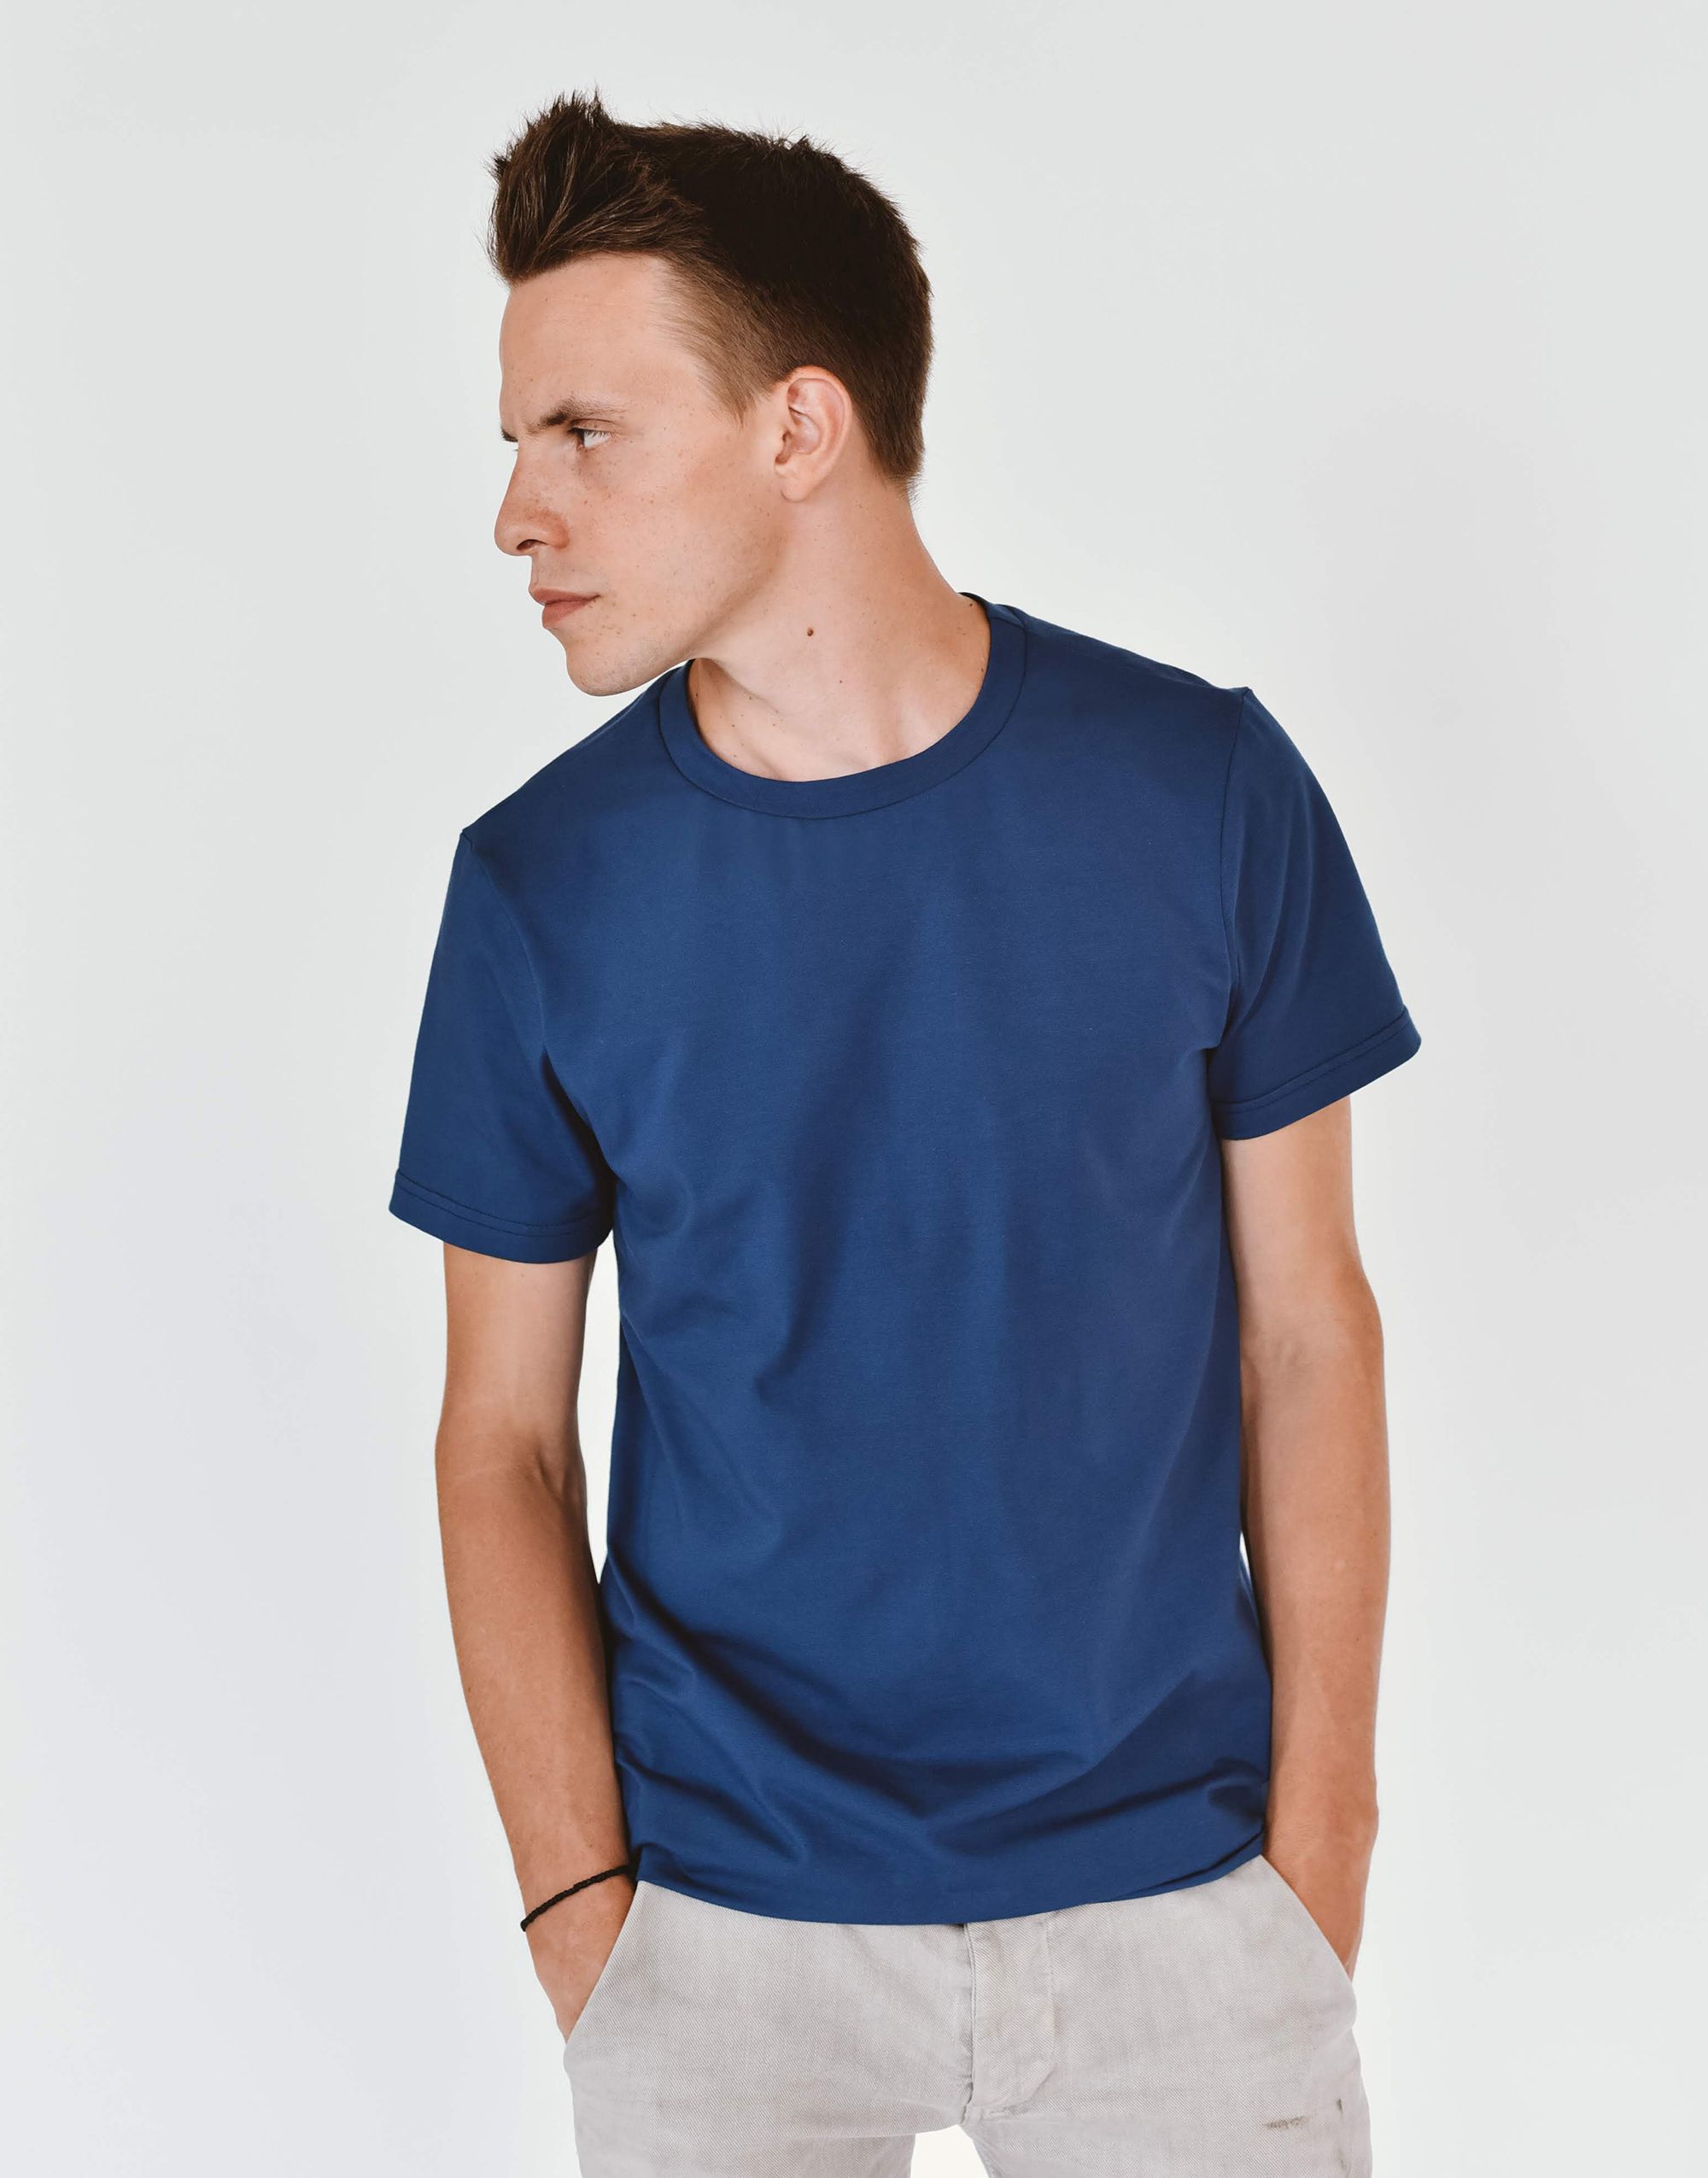 Men’s T-Shirt, pattern №625